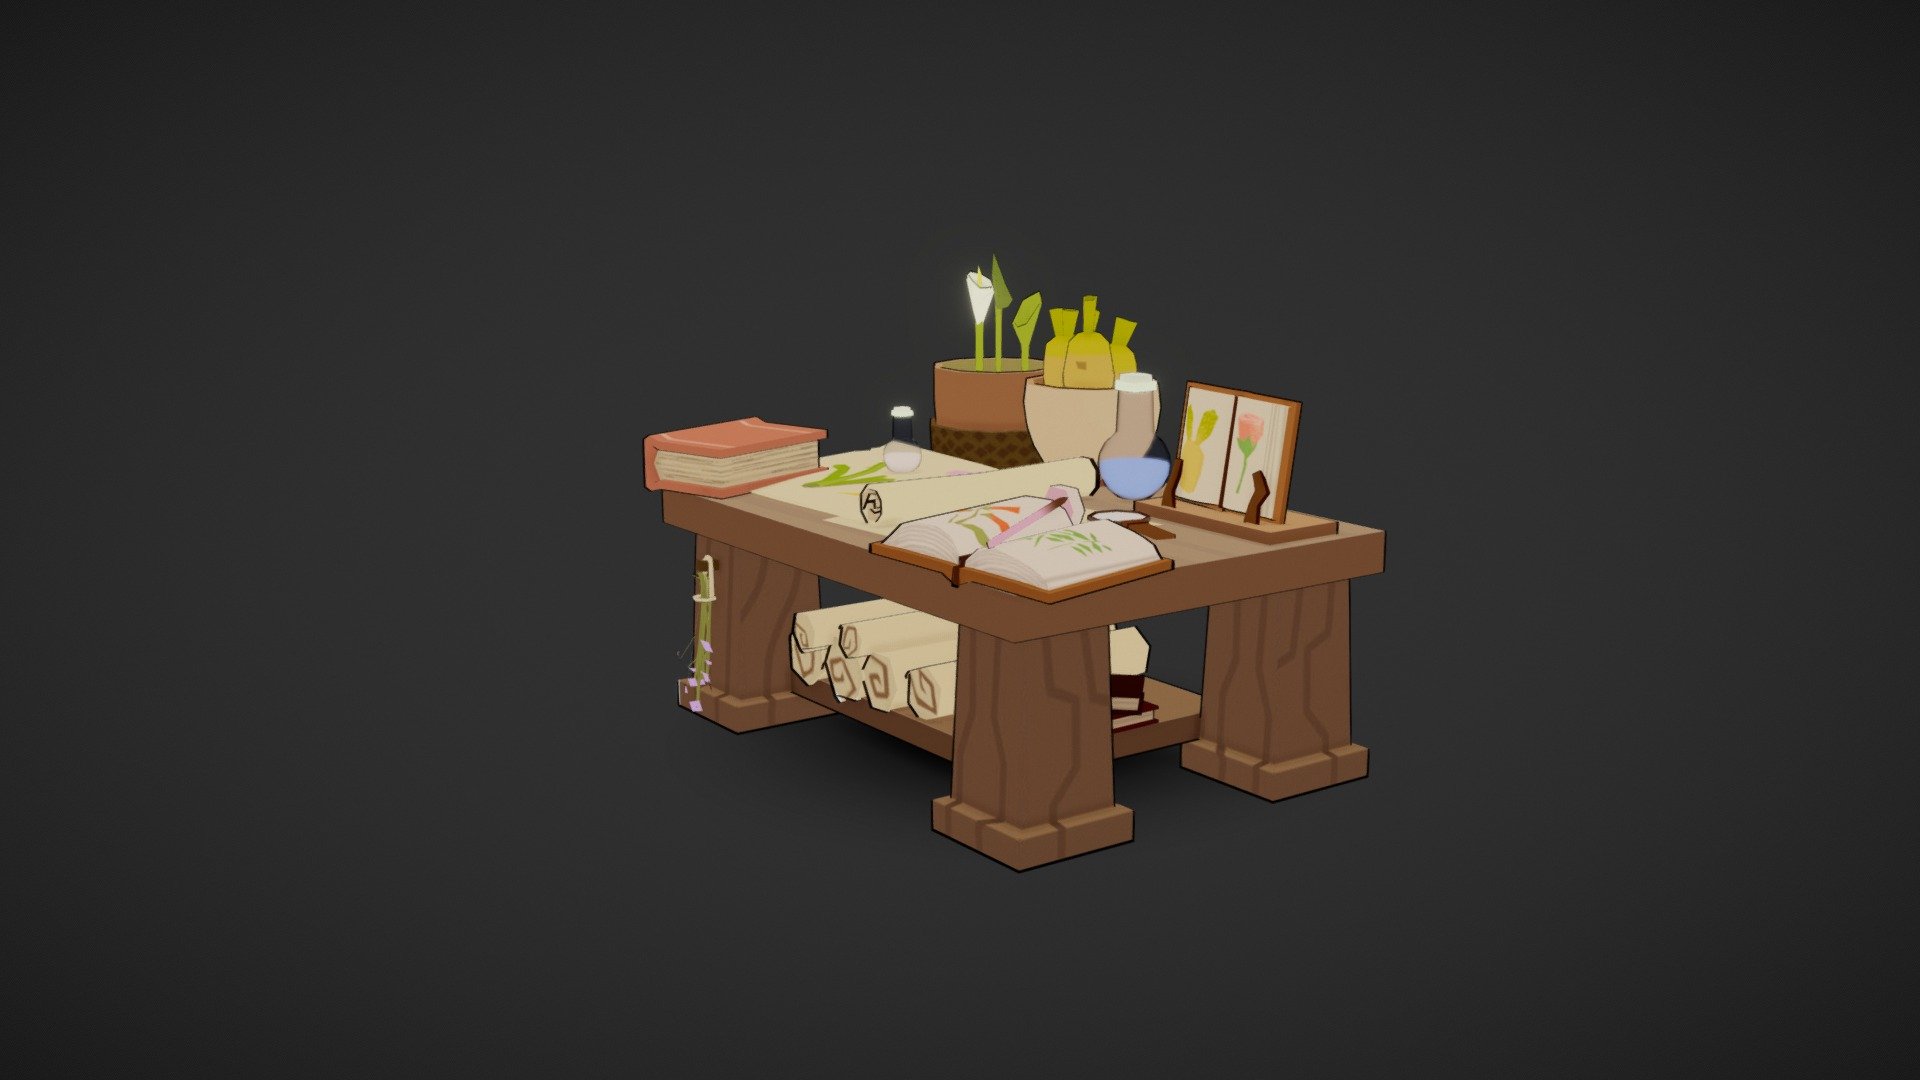 Cartoon desk built in Maya and painted in Photoshop.
Concept by Ha Ko: https://www.artstation.com/artwork/lVxbm5 - Fairy Desk - 3D model by francesco.gianfreda 3d model